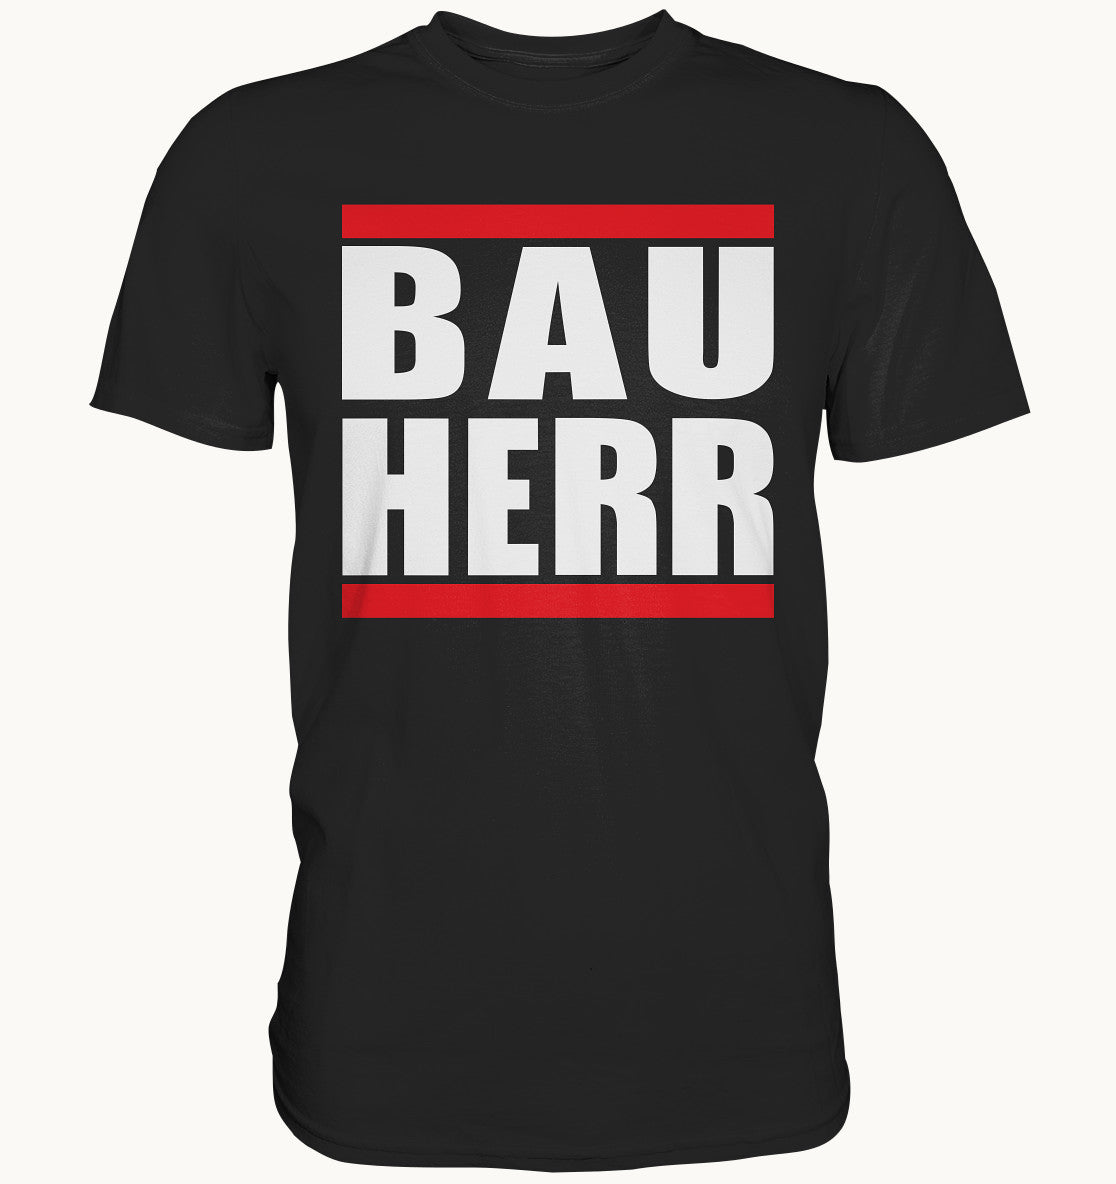 BAU HERR - Baufun Shop